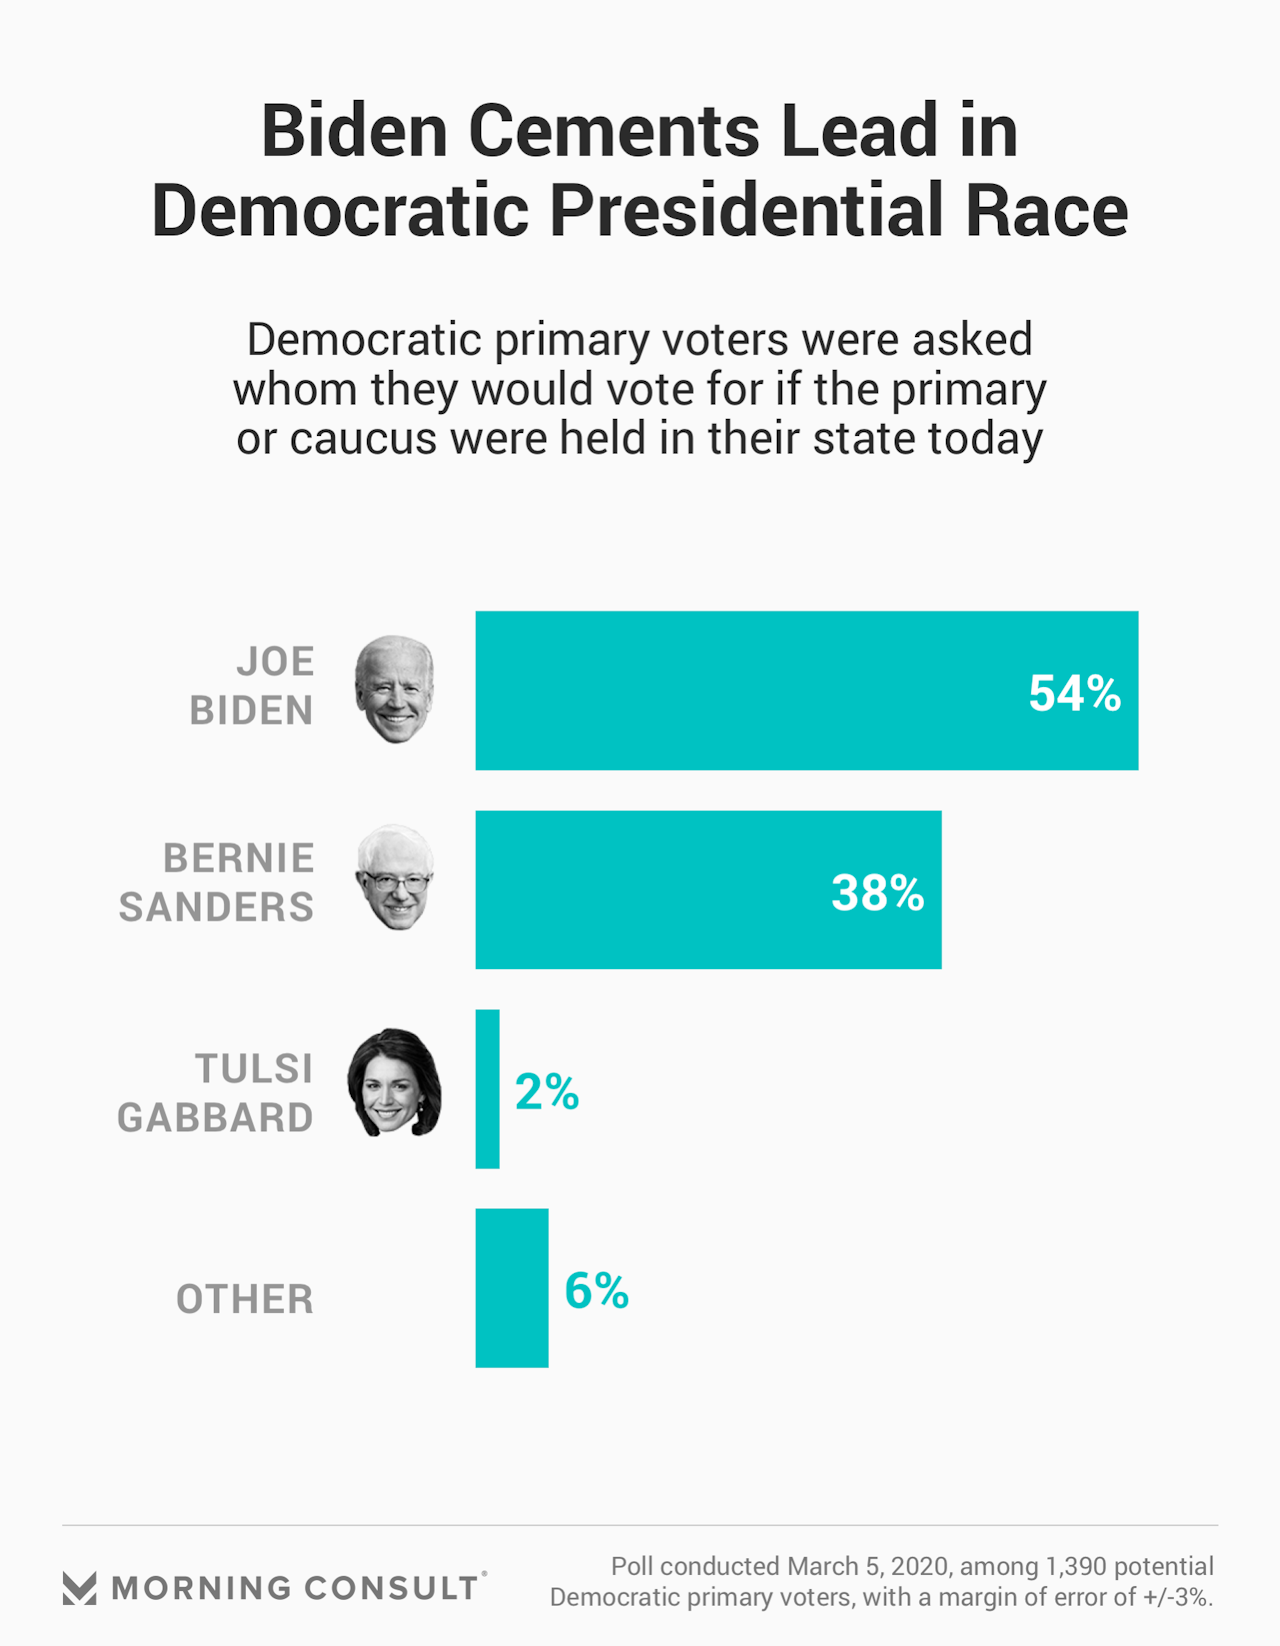 Biden Boasts 16-Point Lead Over Sanders in Democratic Presidential Race